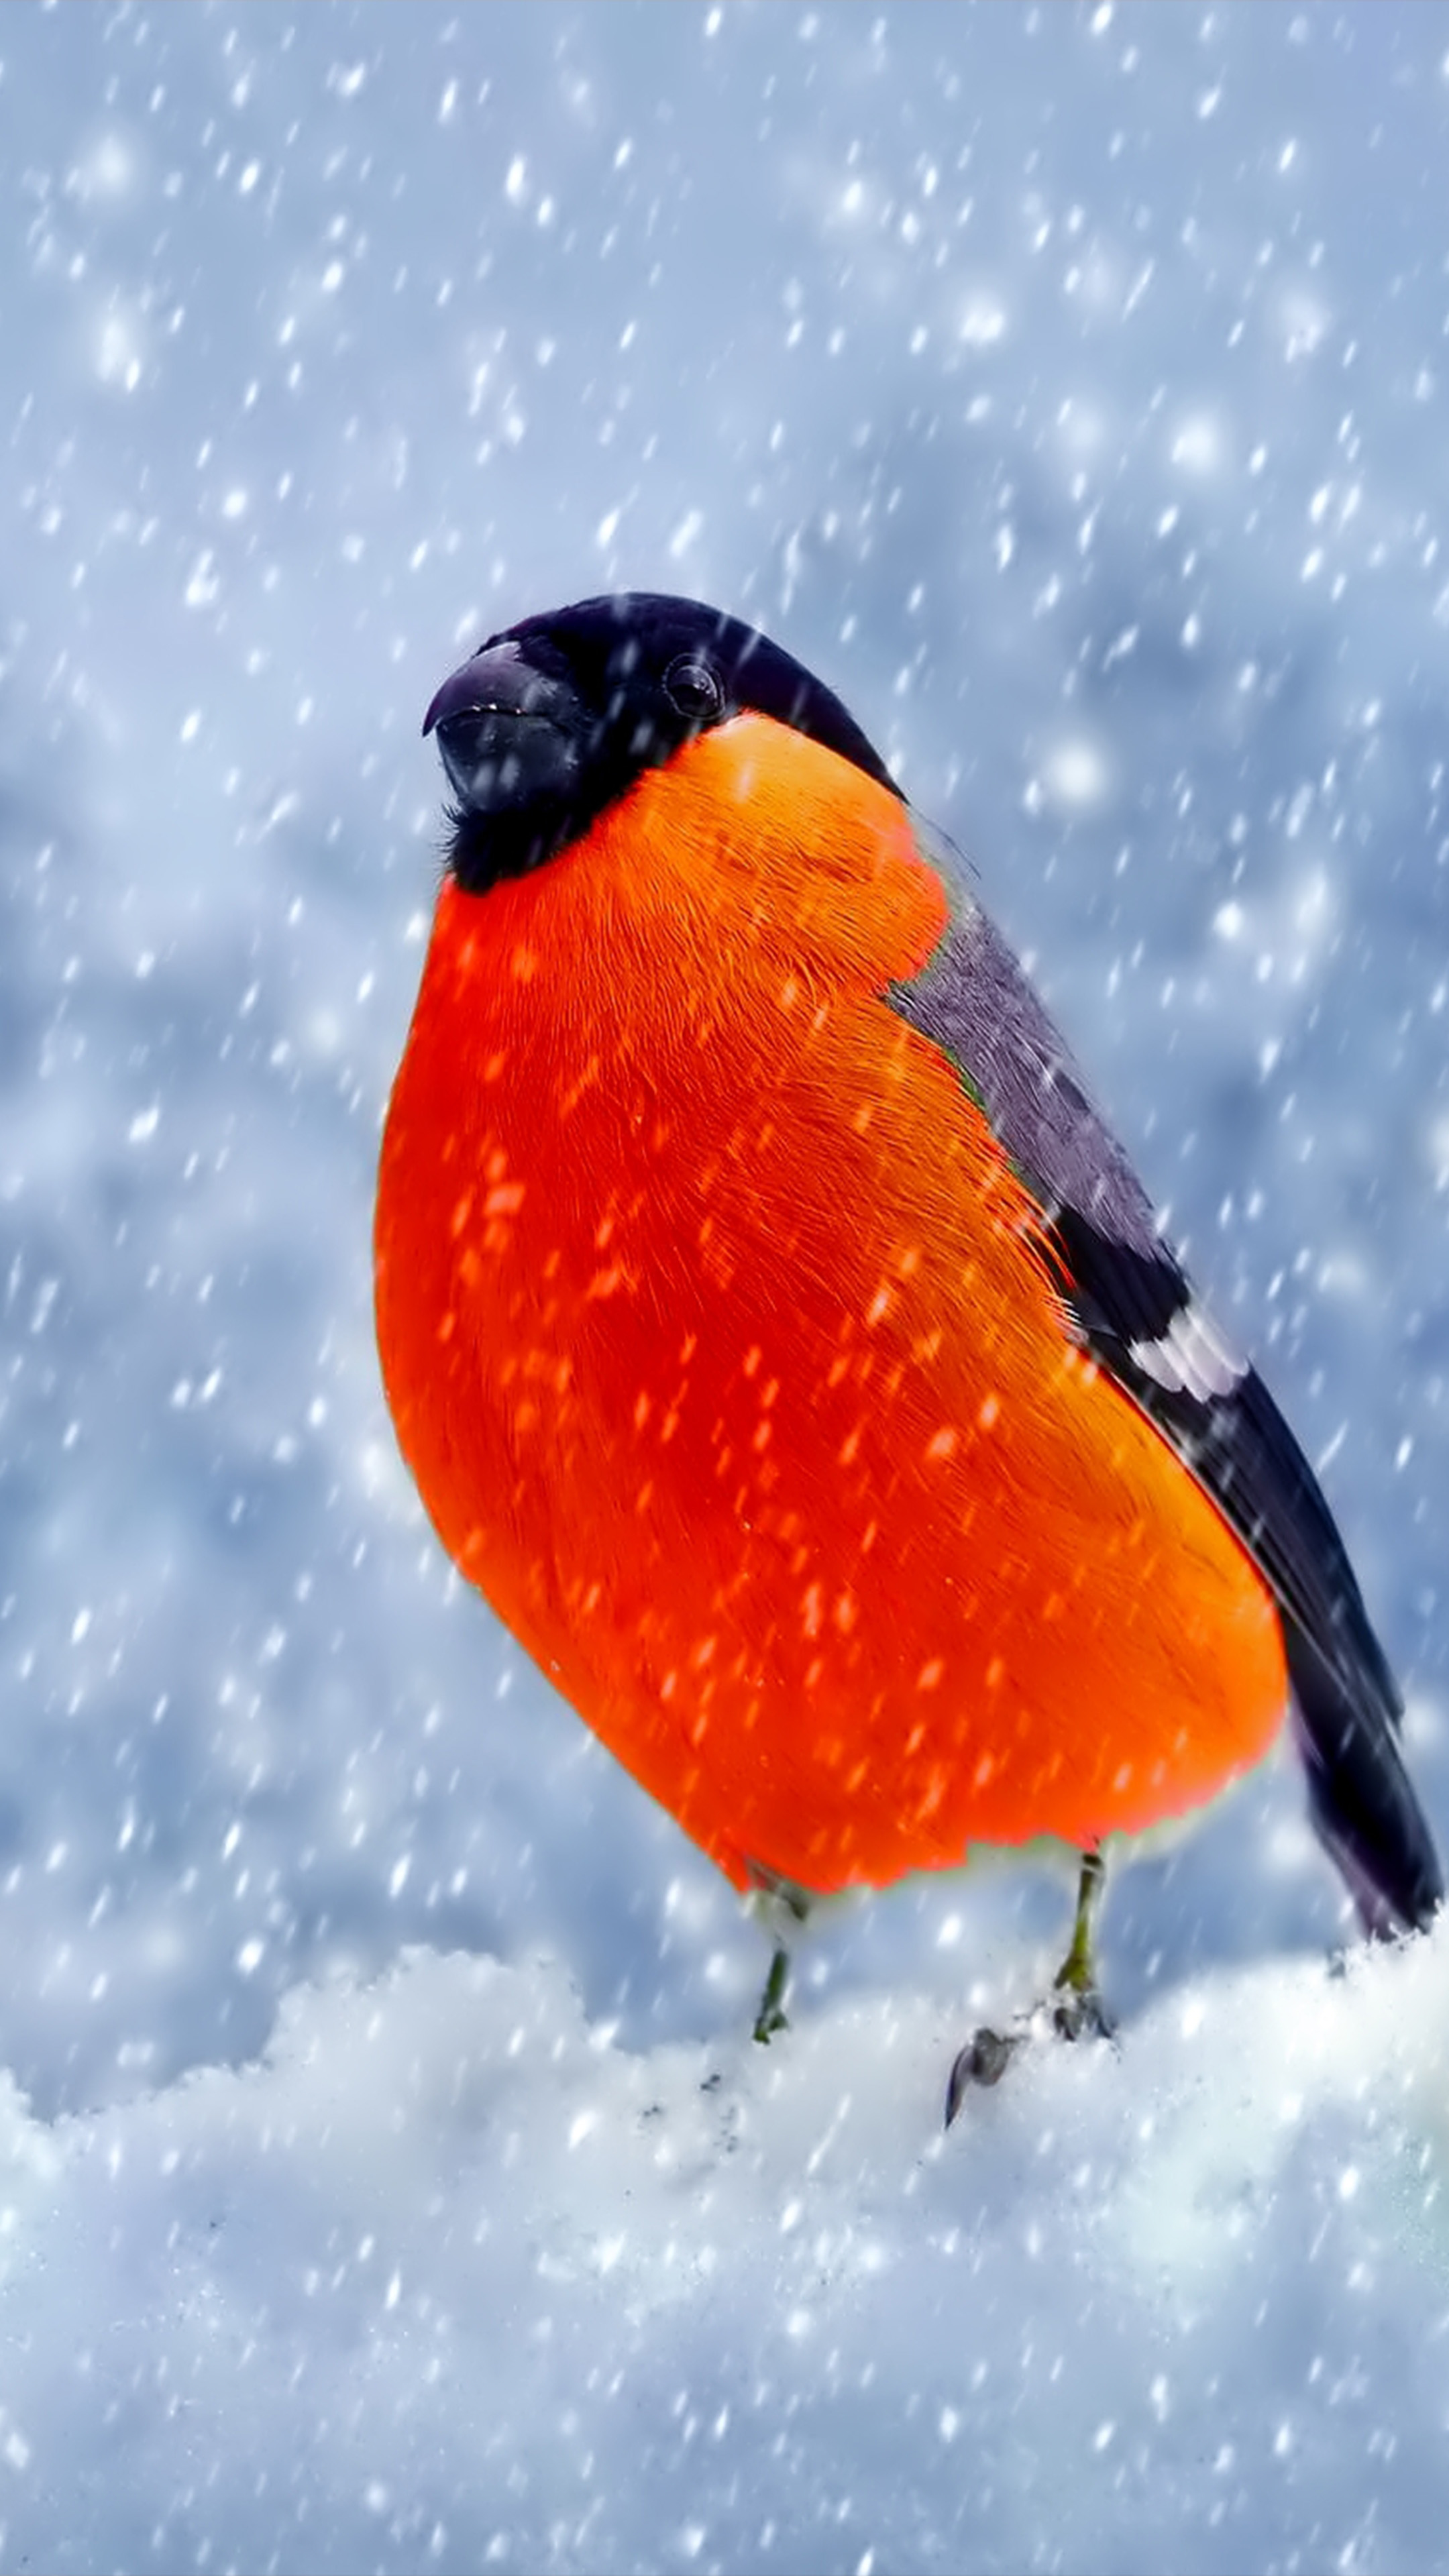 Bullfinch Bird Winter Snow Free 4K Ultra HD Mobile Wallpaper